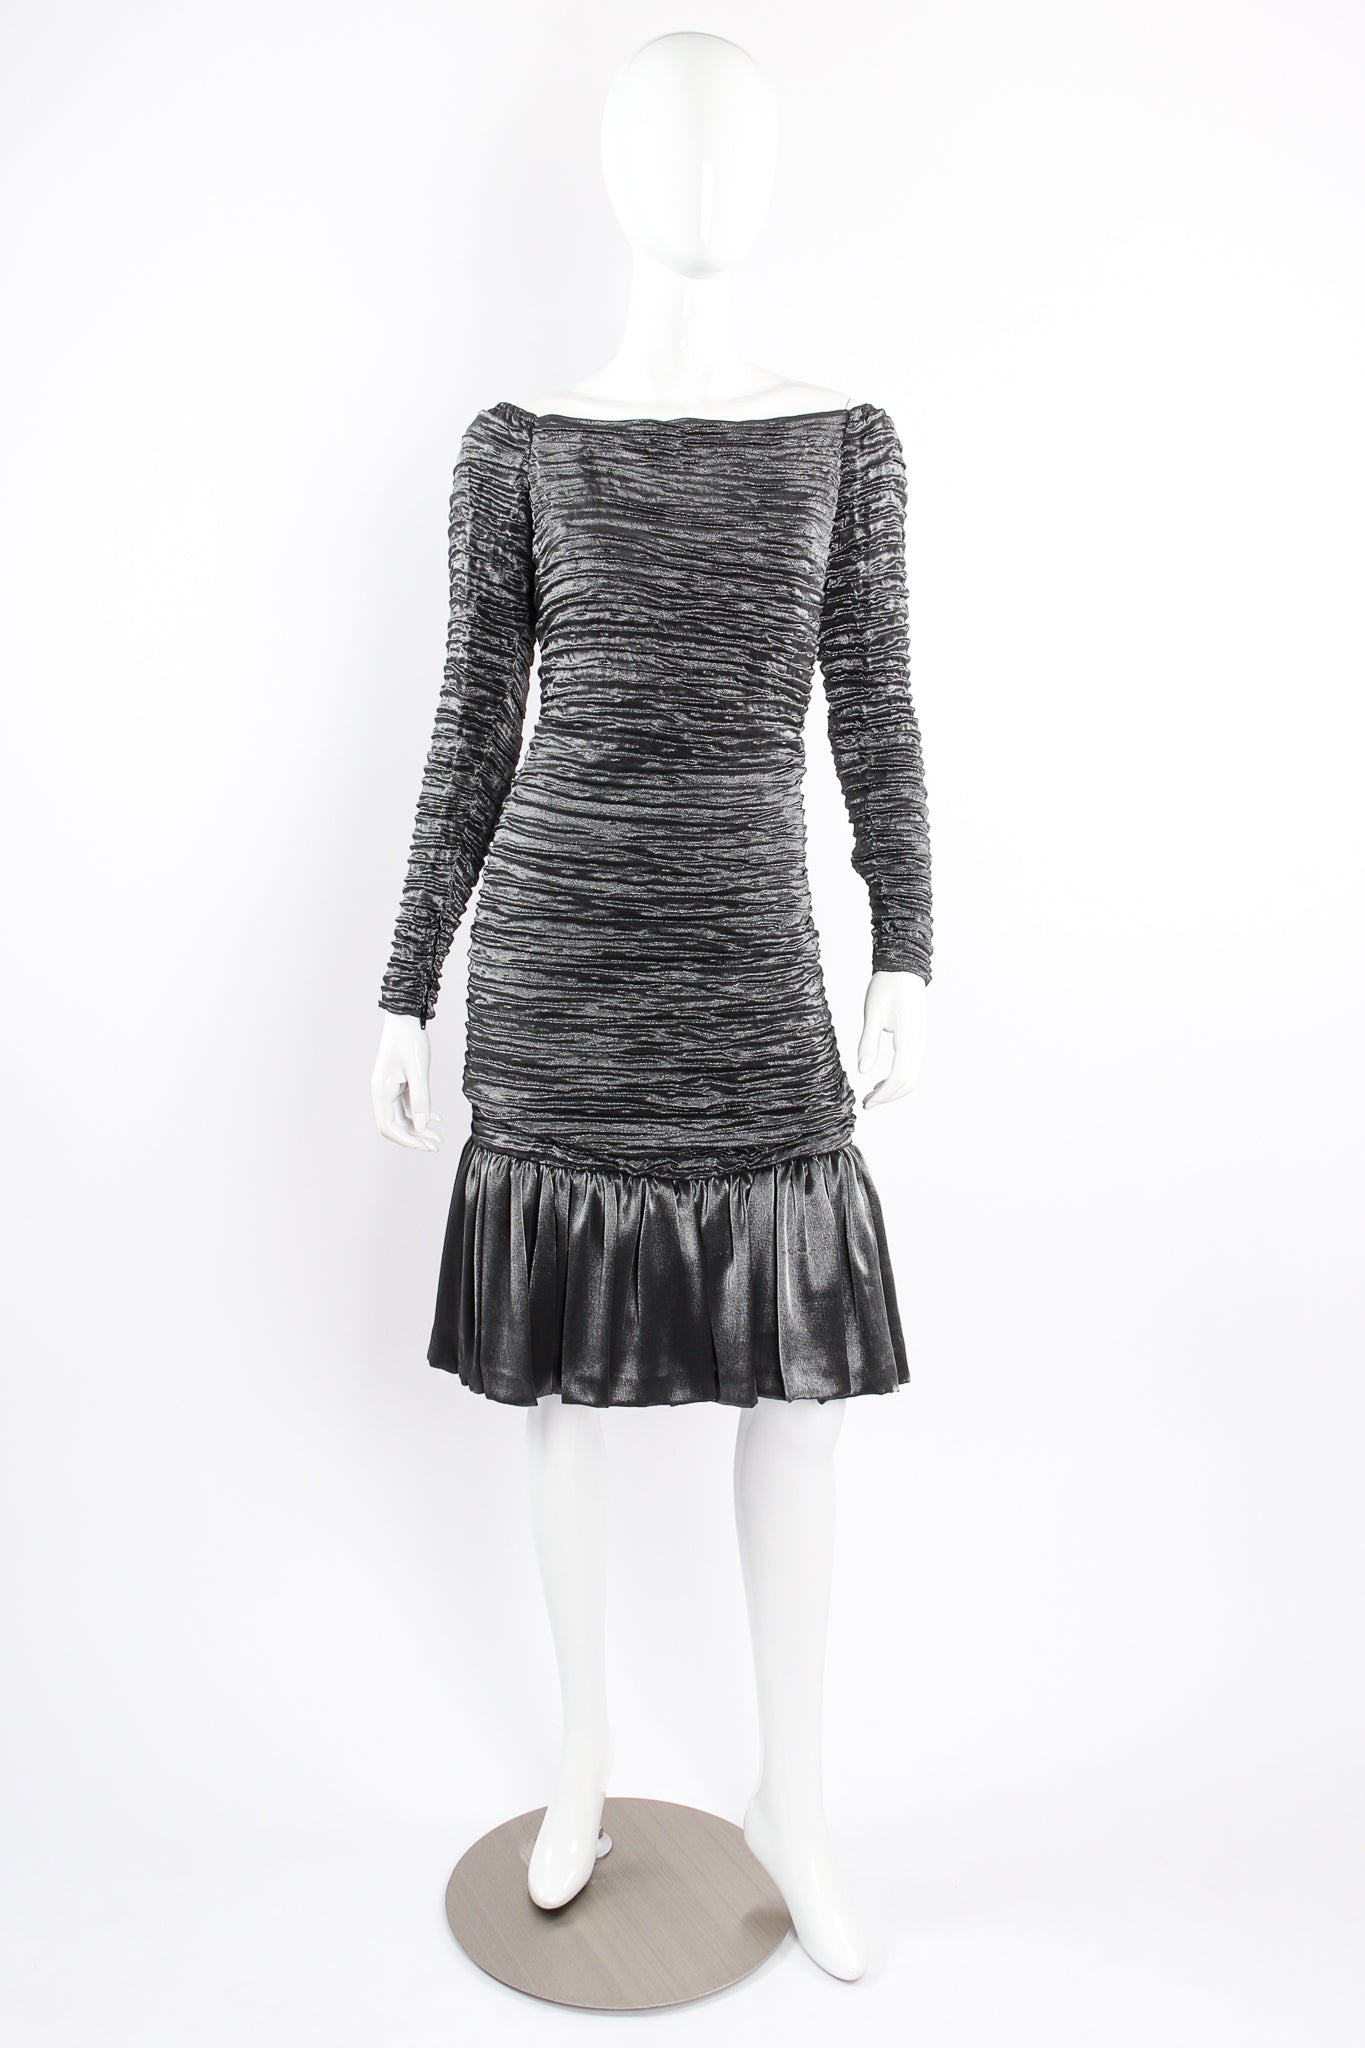 Jean-Louis Scherrer 2 Silver & Navy Metallic Velvet Long Sleeve Sheath Dress